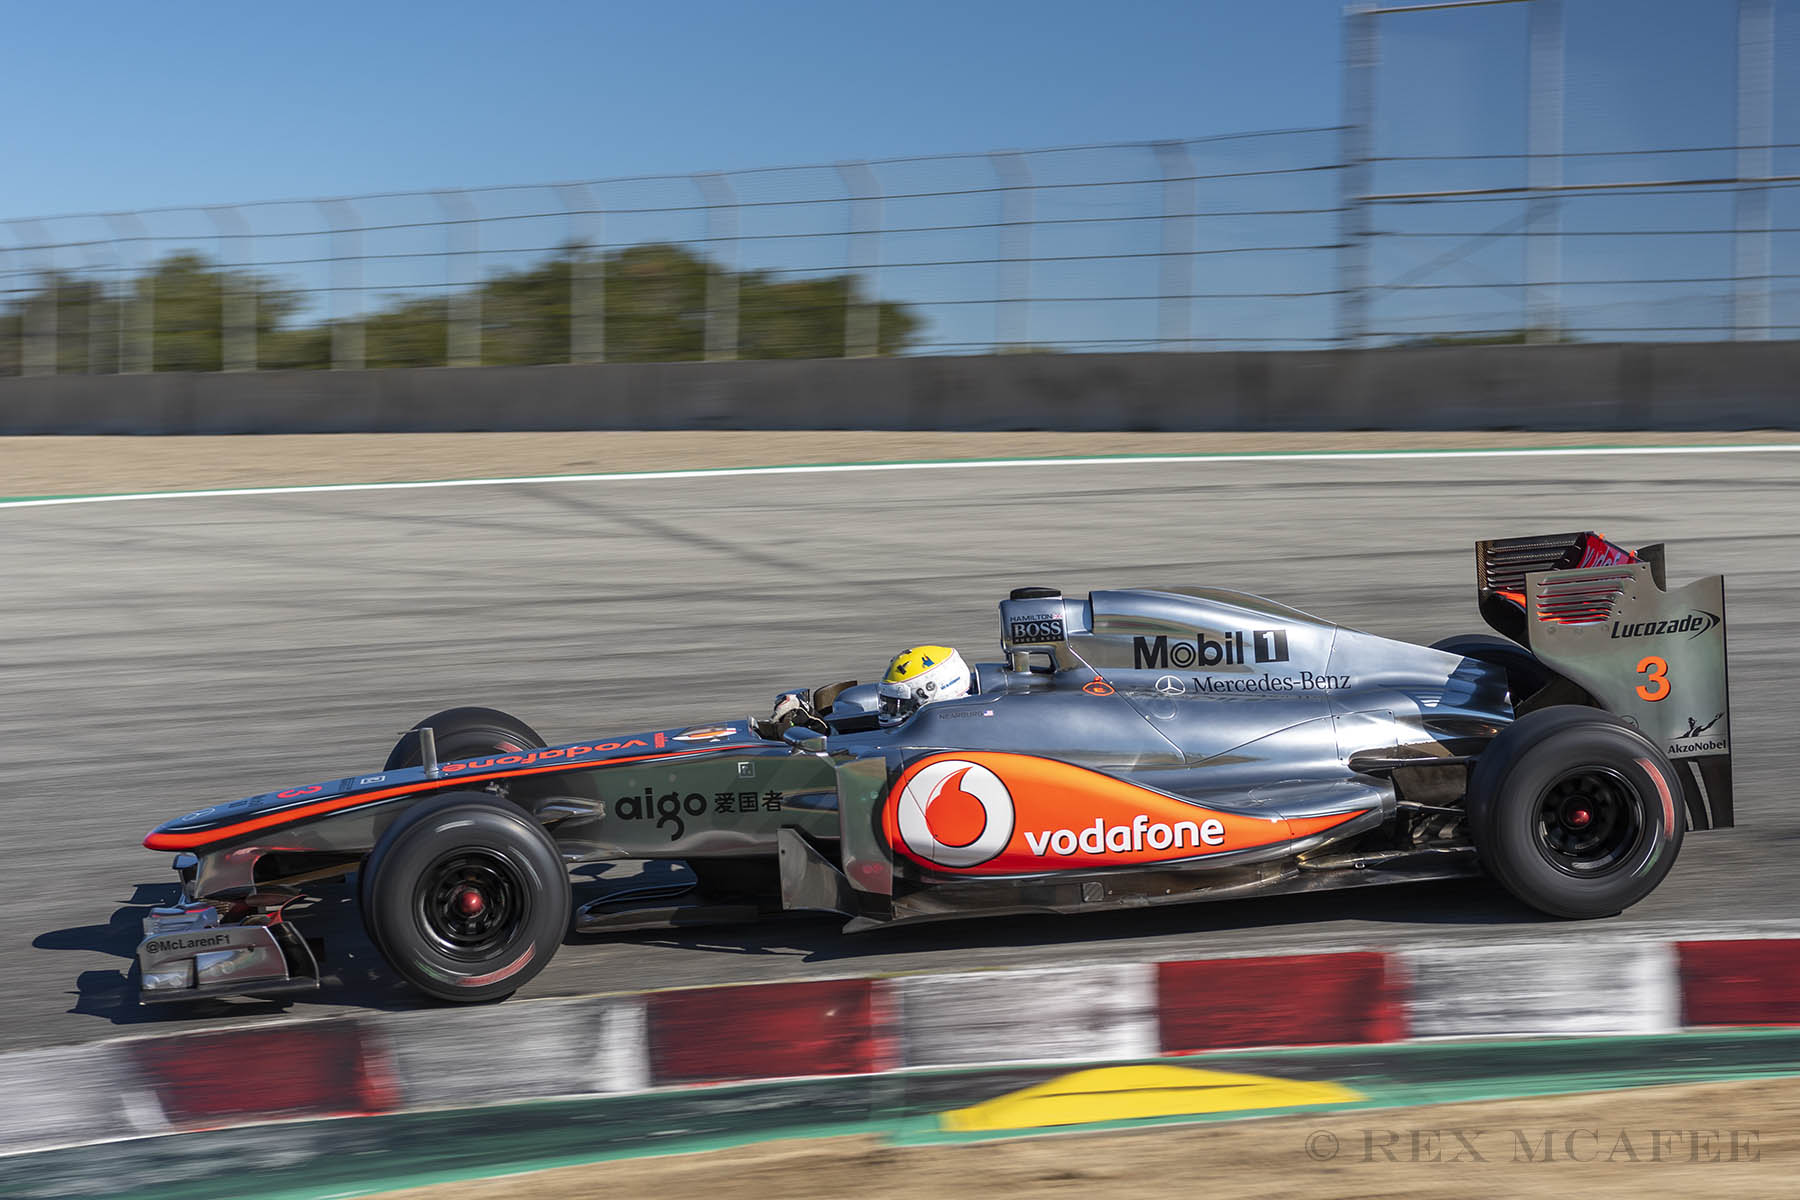 Charles Nearburg enjoys a few laps in his McLaren F1 car..  Photo © Rex McAfee Rex McAfee rexmcafee@gmail.com